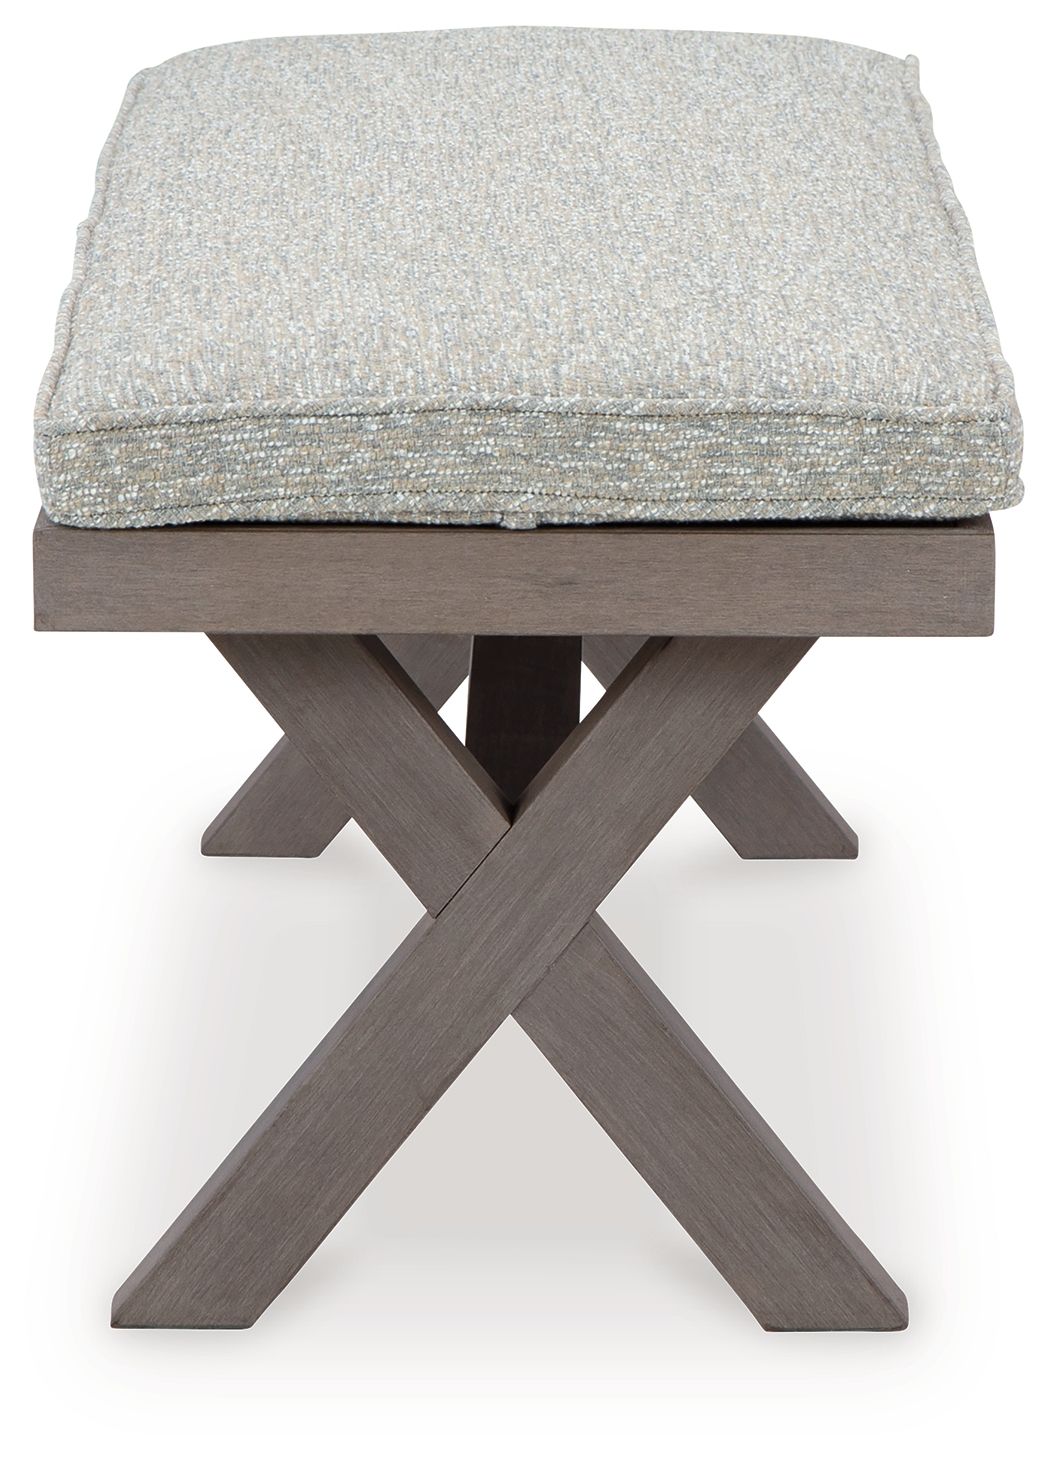 Hillside Barn - Gray / Brown - Bench With Cushion - Tony's Home Furnishings